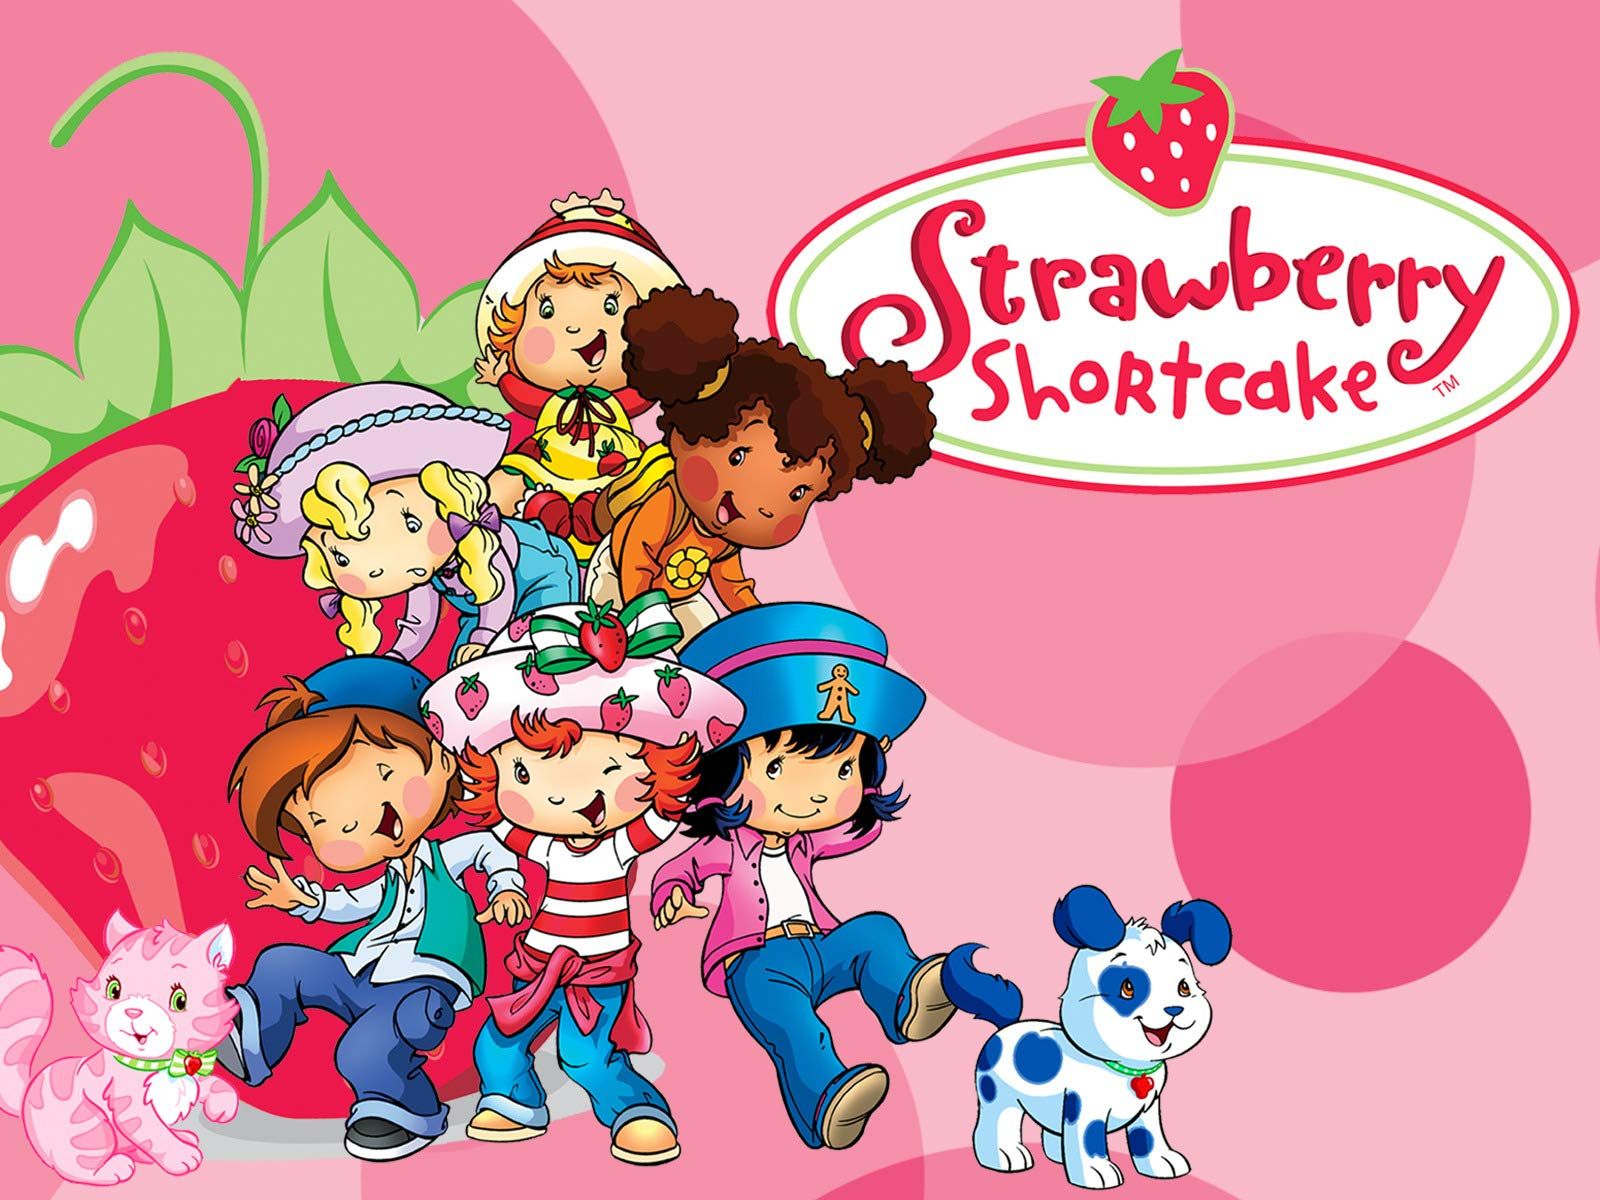 Strawberry shortcake tv tropes